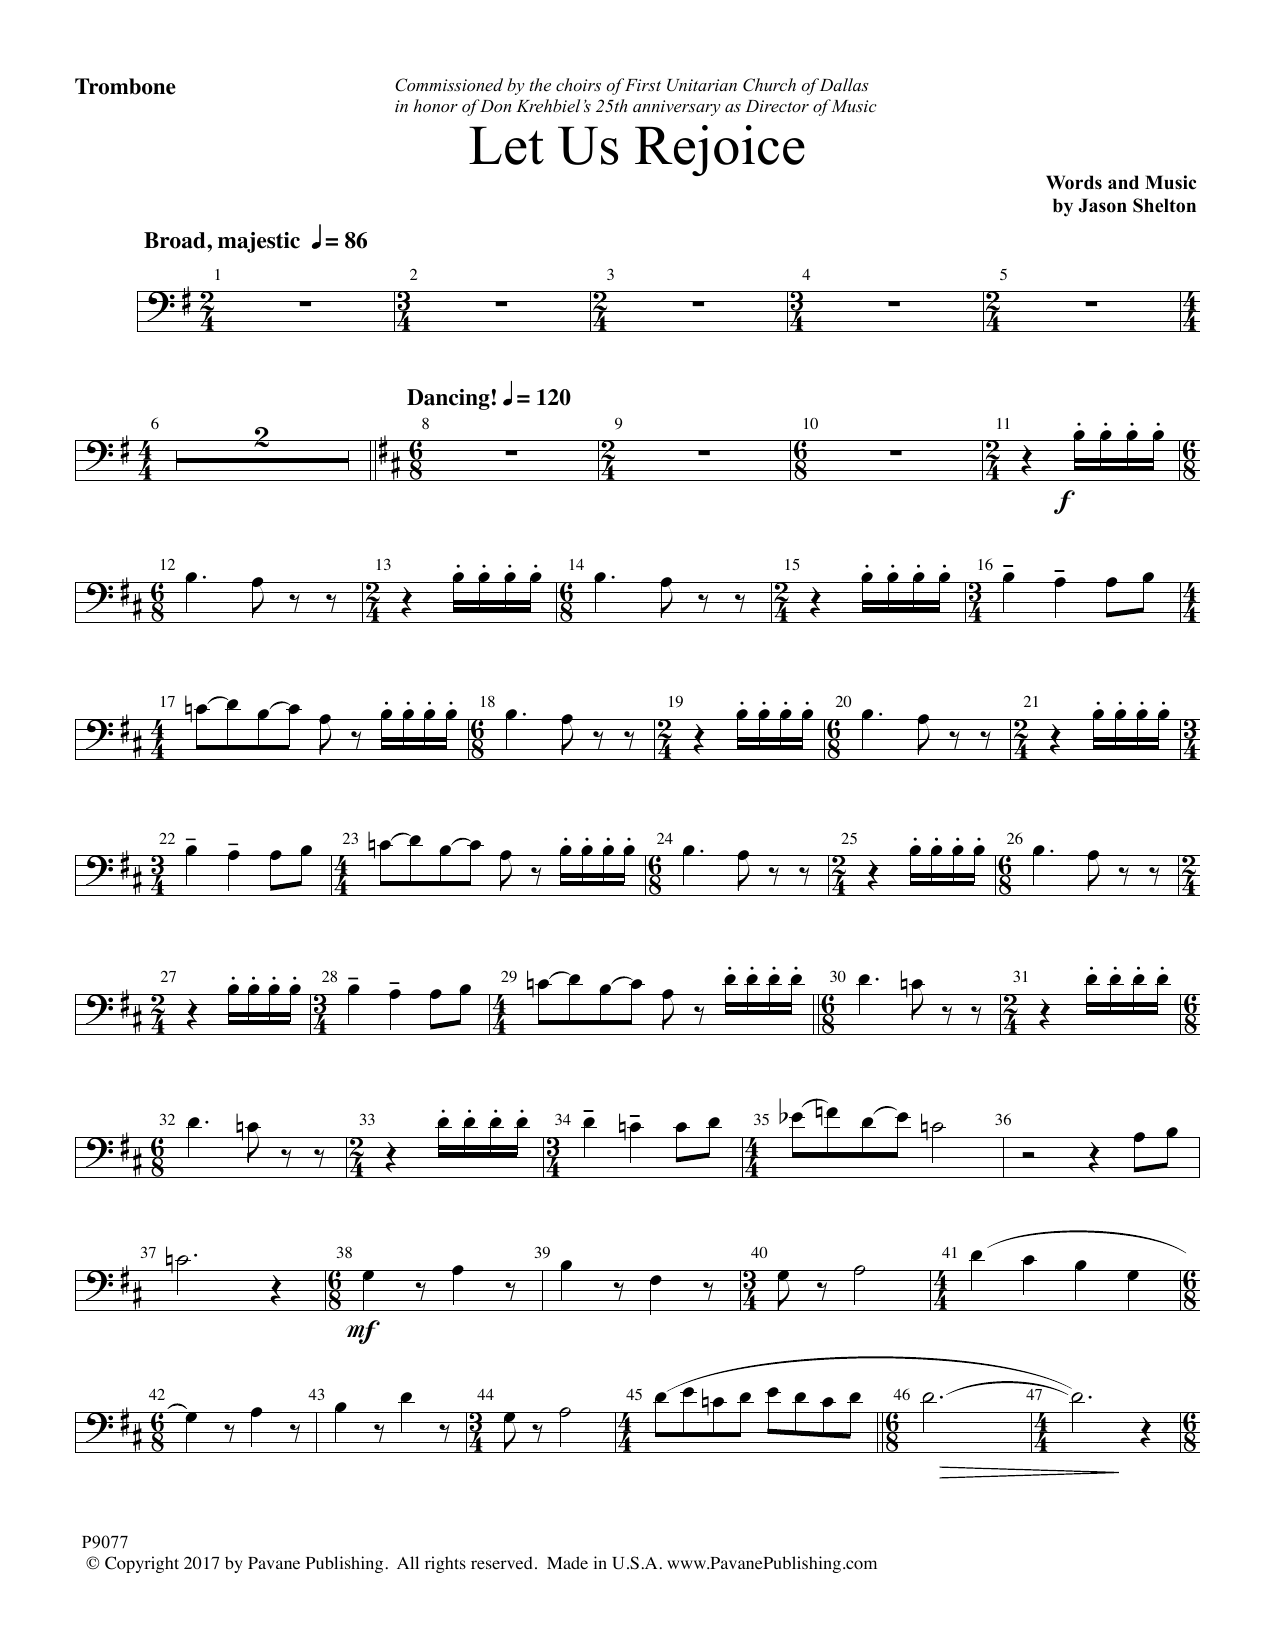 Jason Shelton To This Day - Trombone Sheet Music Notes & Chords for Choir Instrumental Pak - Download or Print PDF